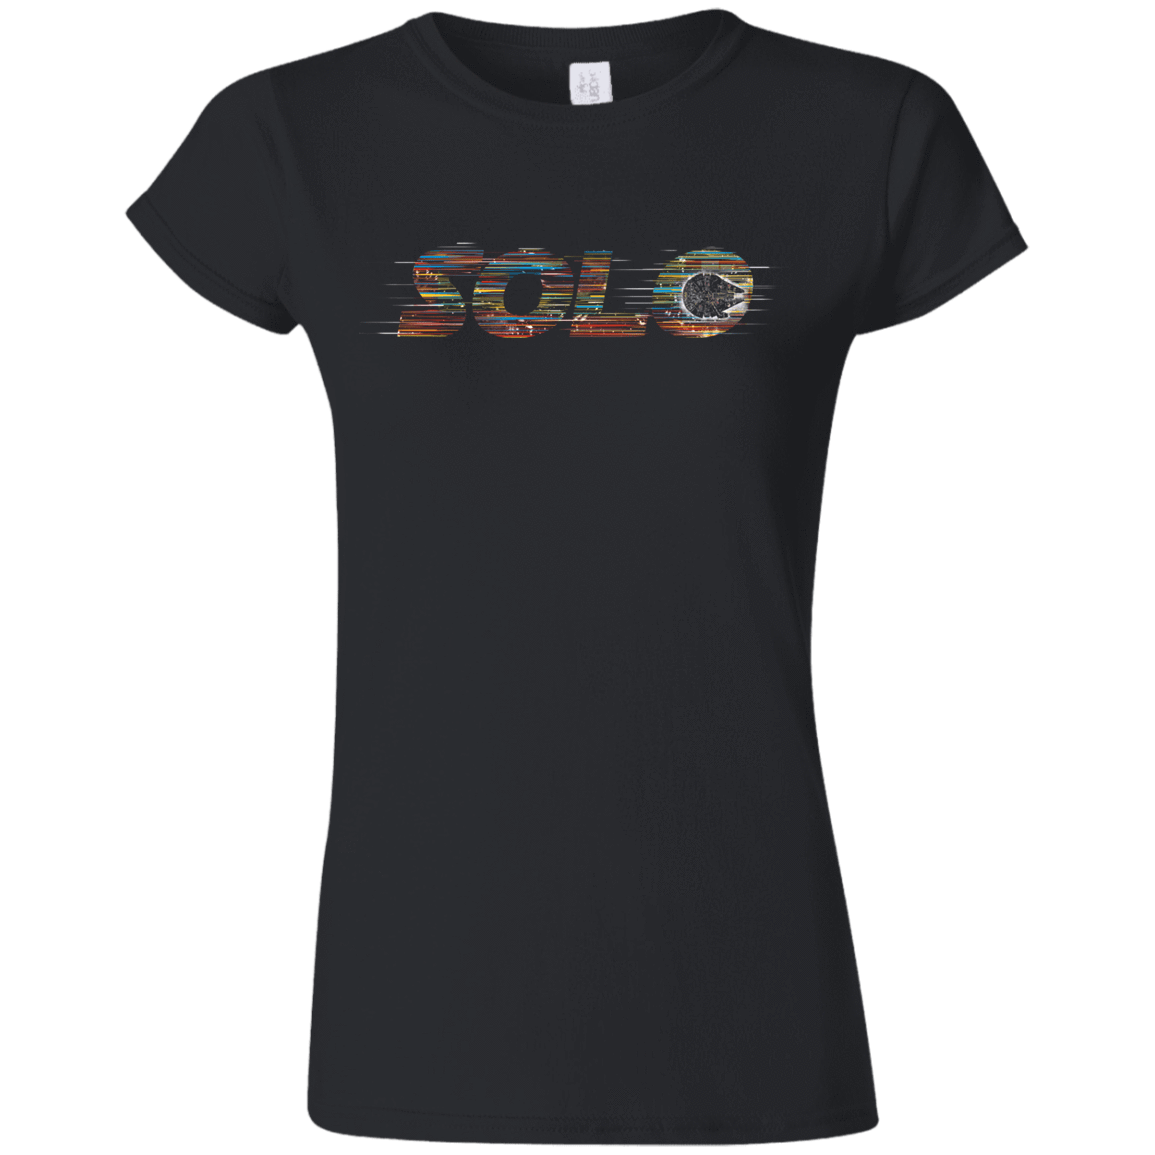 T-Shirts Black / S Solo Junior Slimmer-Fit T-Shirt